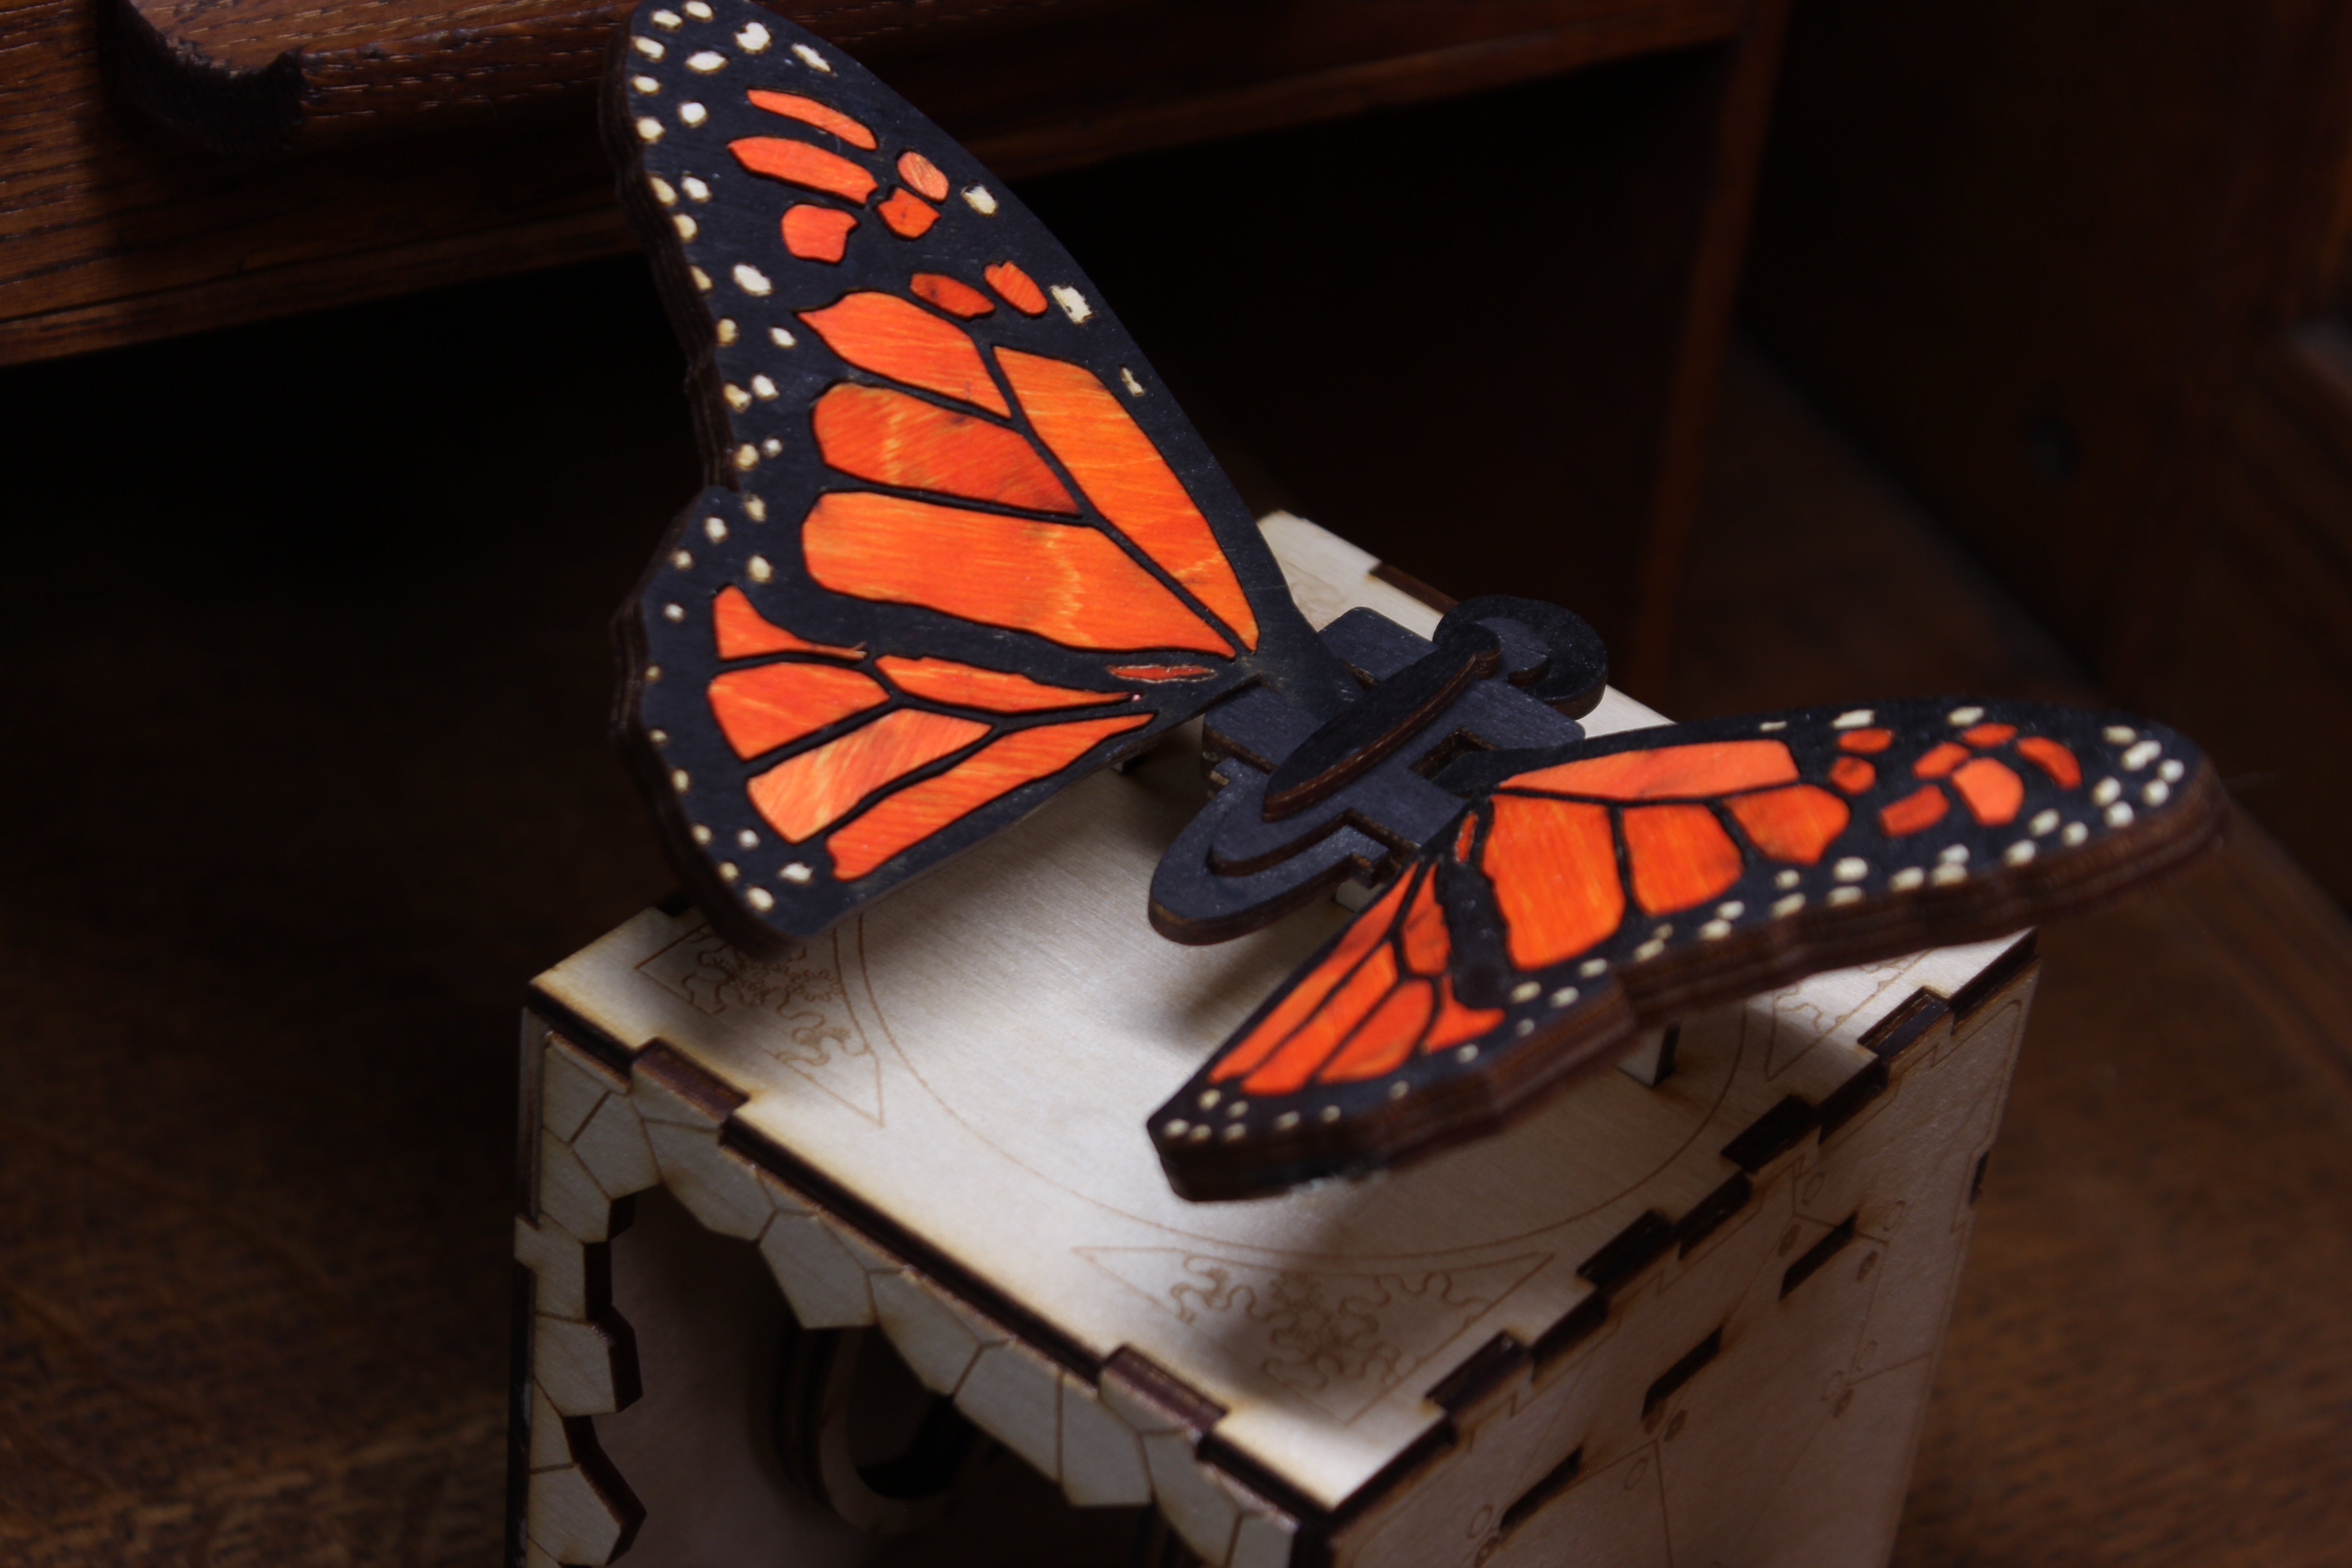 Creatology Paper Mache Kit - 1 Butterfly